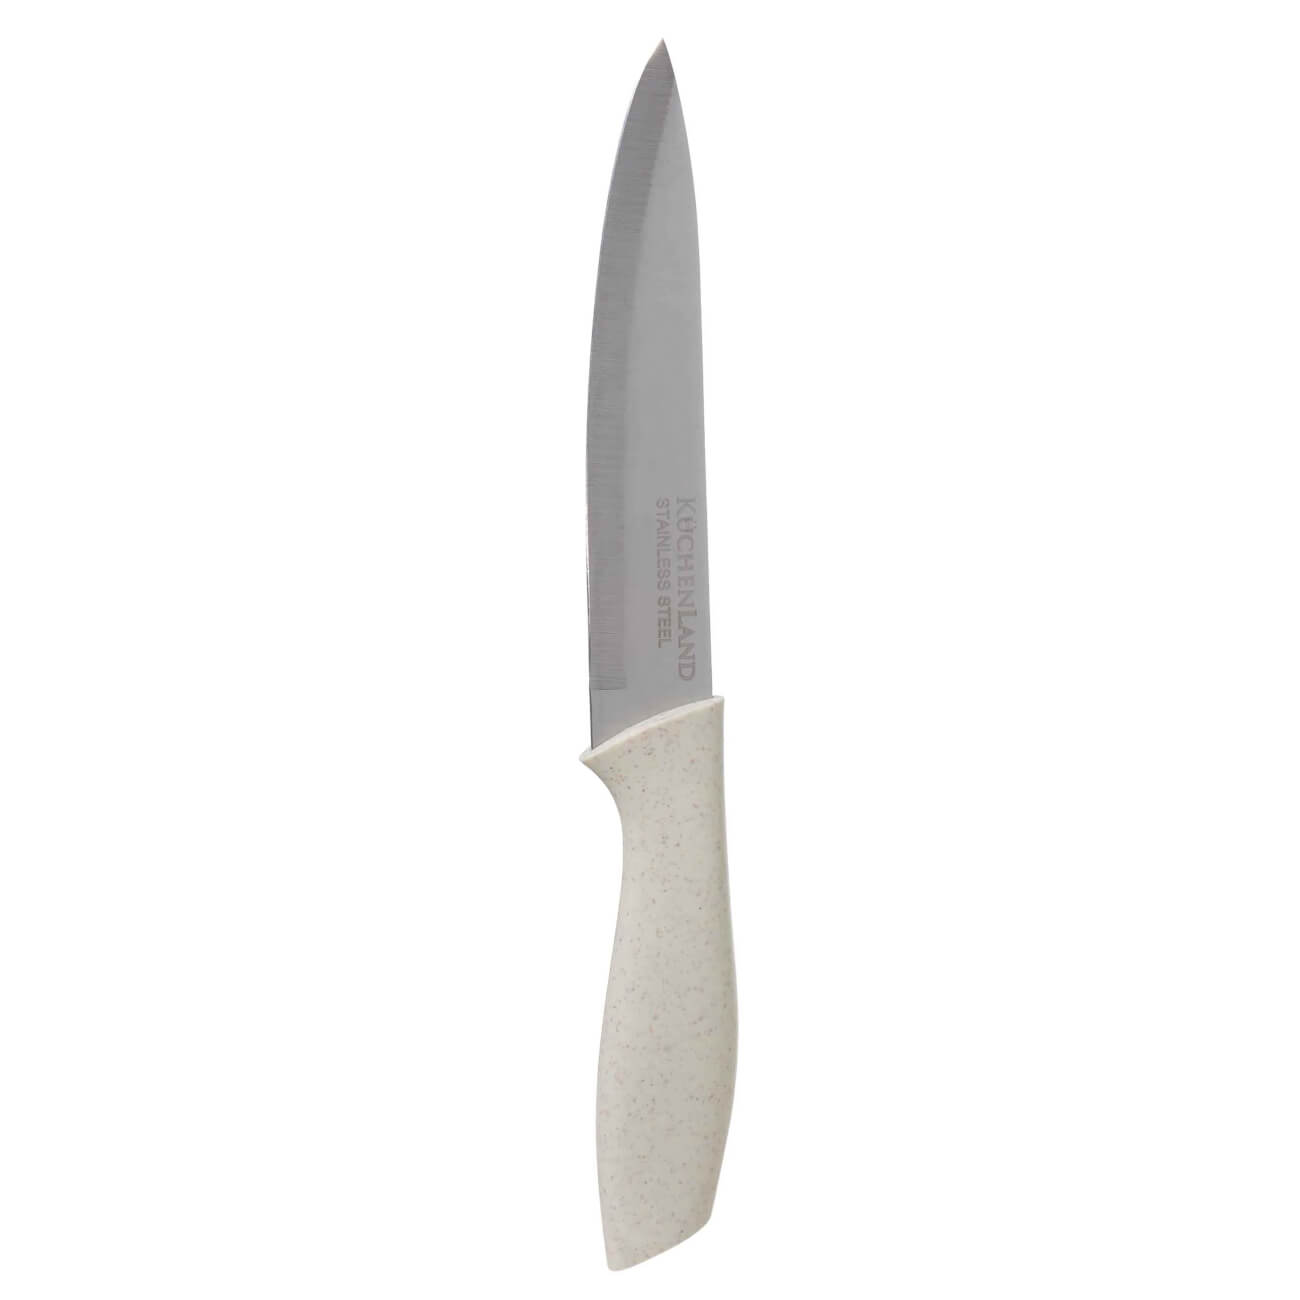 Нож для нарезки, 15 см, сталь/пластик, молочный, Speck-light